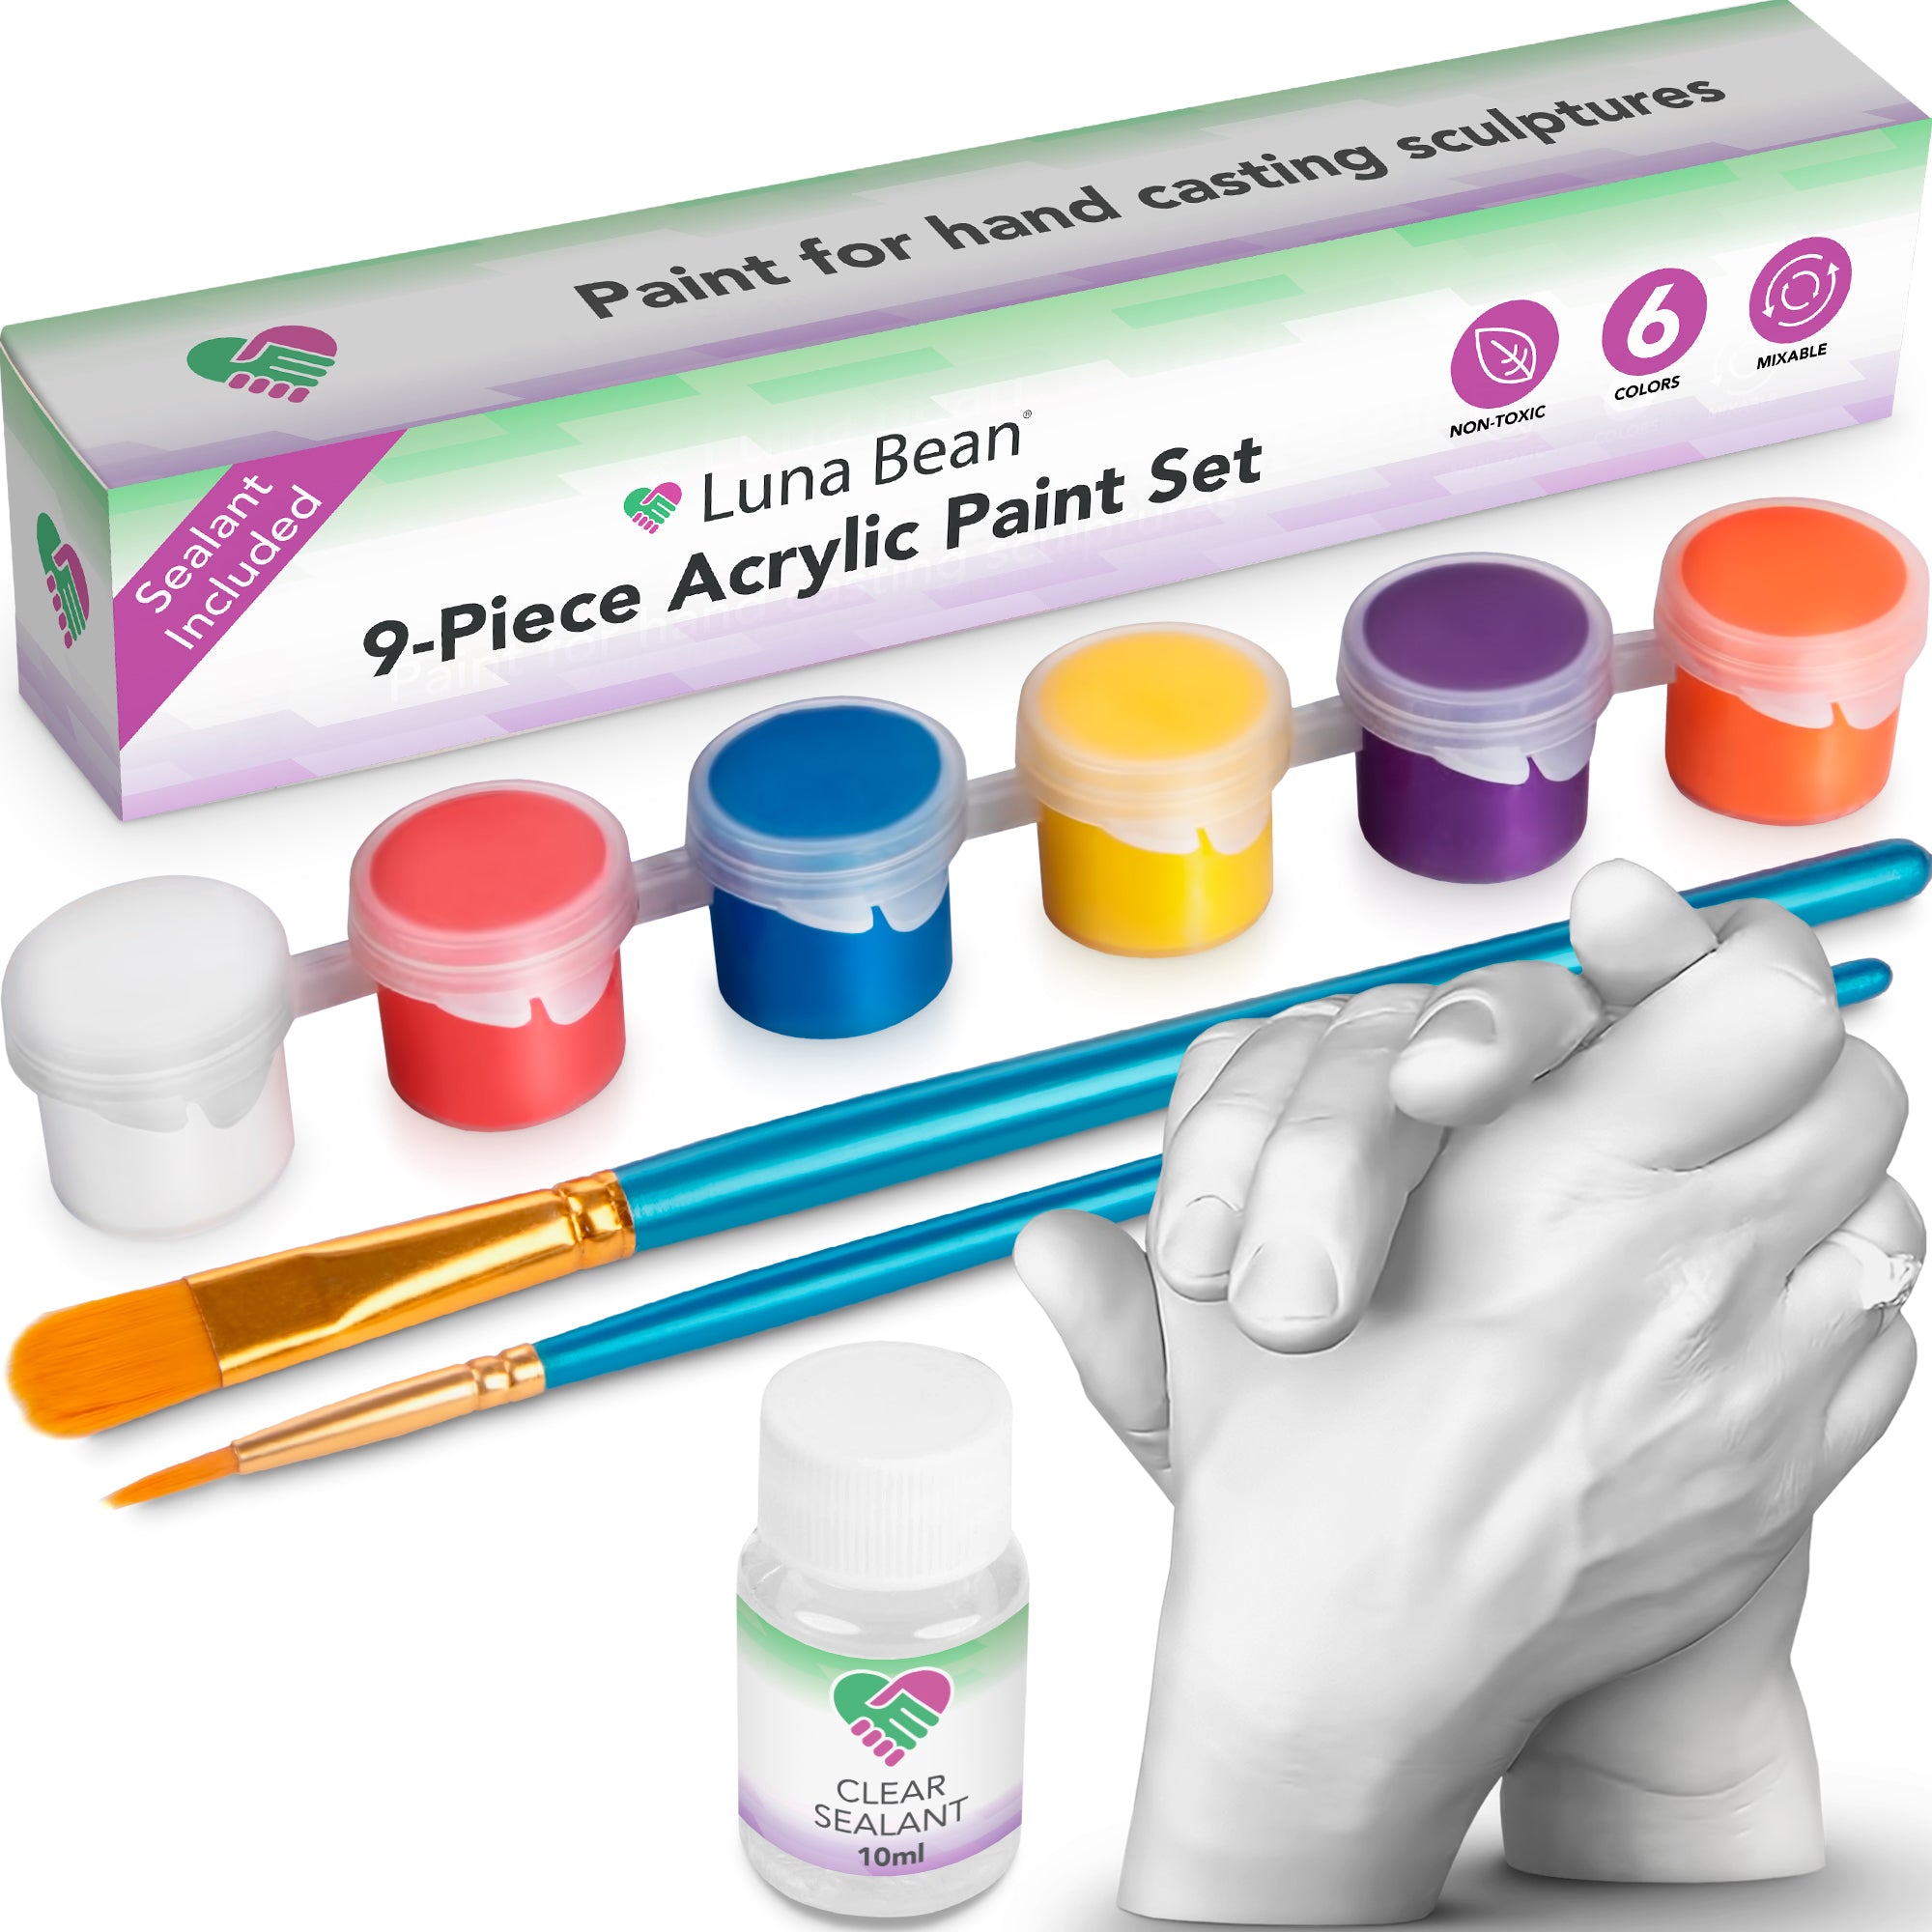 Luna Bean Acrylic Paint Set - Rainbow Paint Colors for Arts and